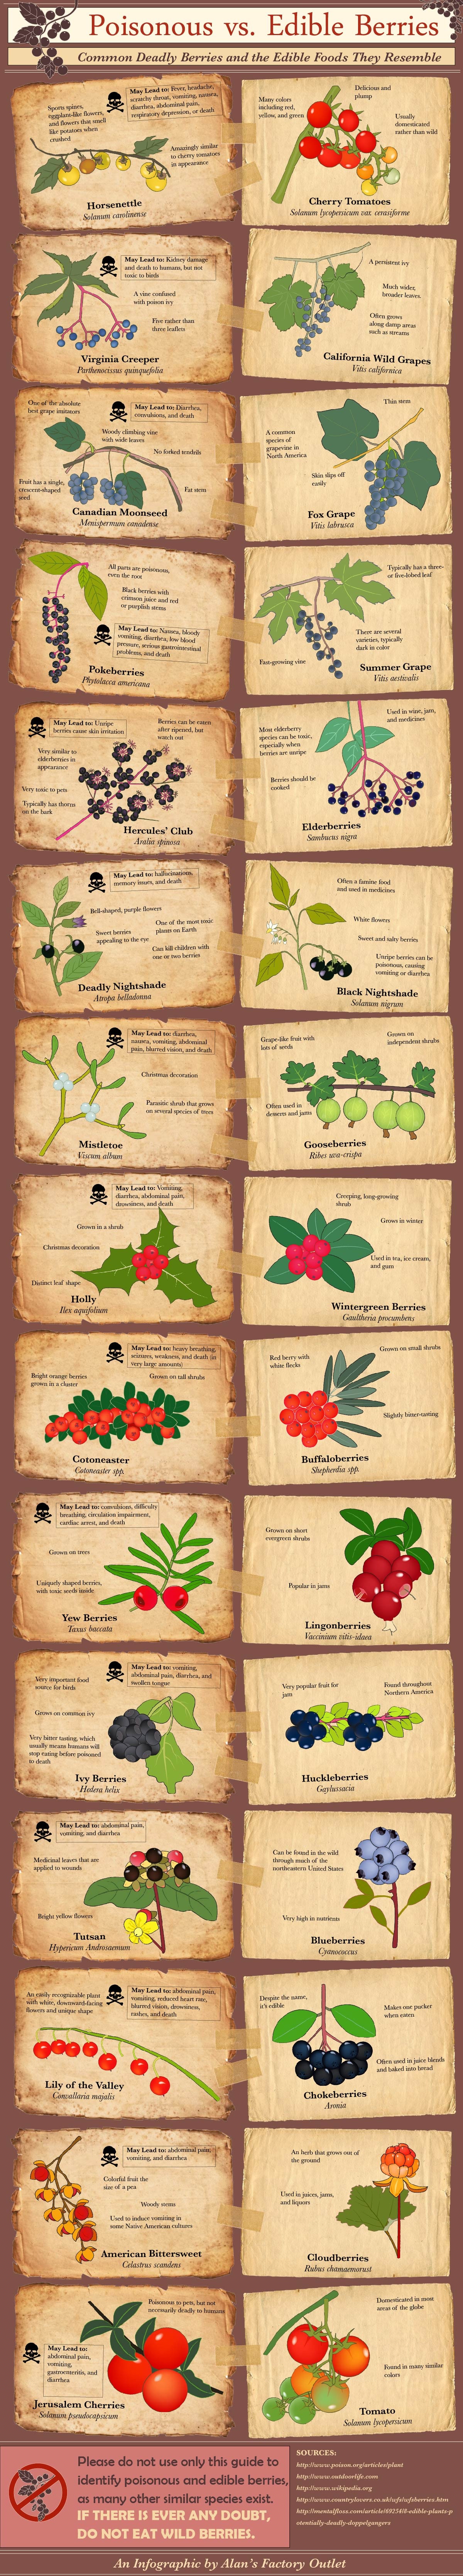 Berries: Edible vs poisonous - Infographic